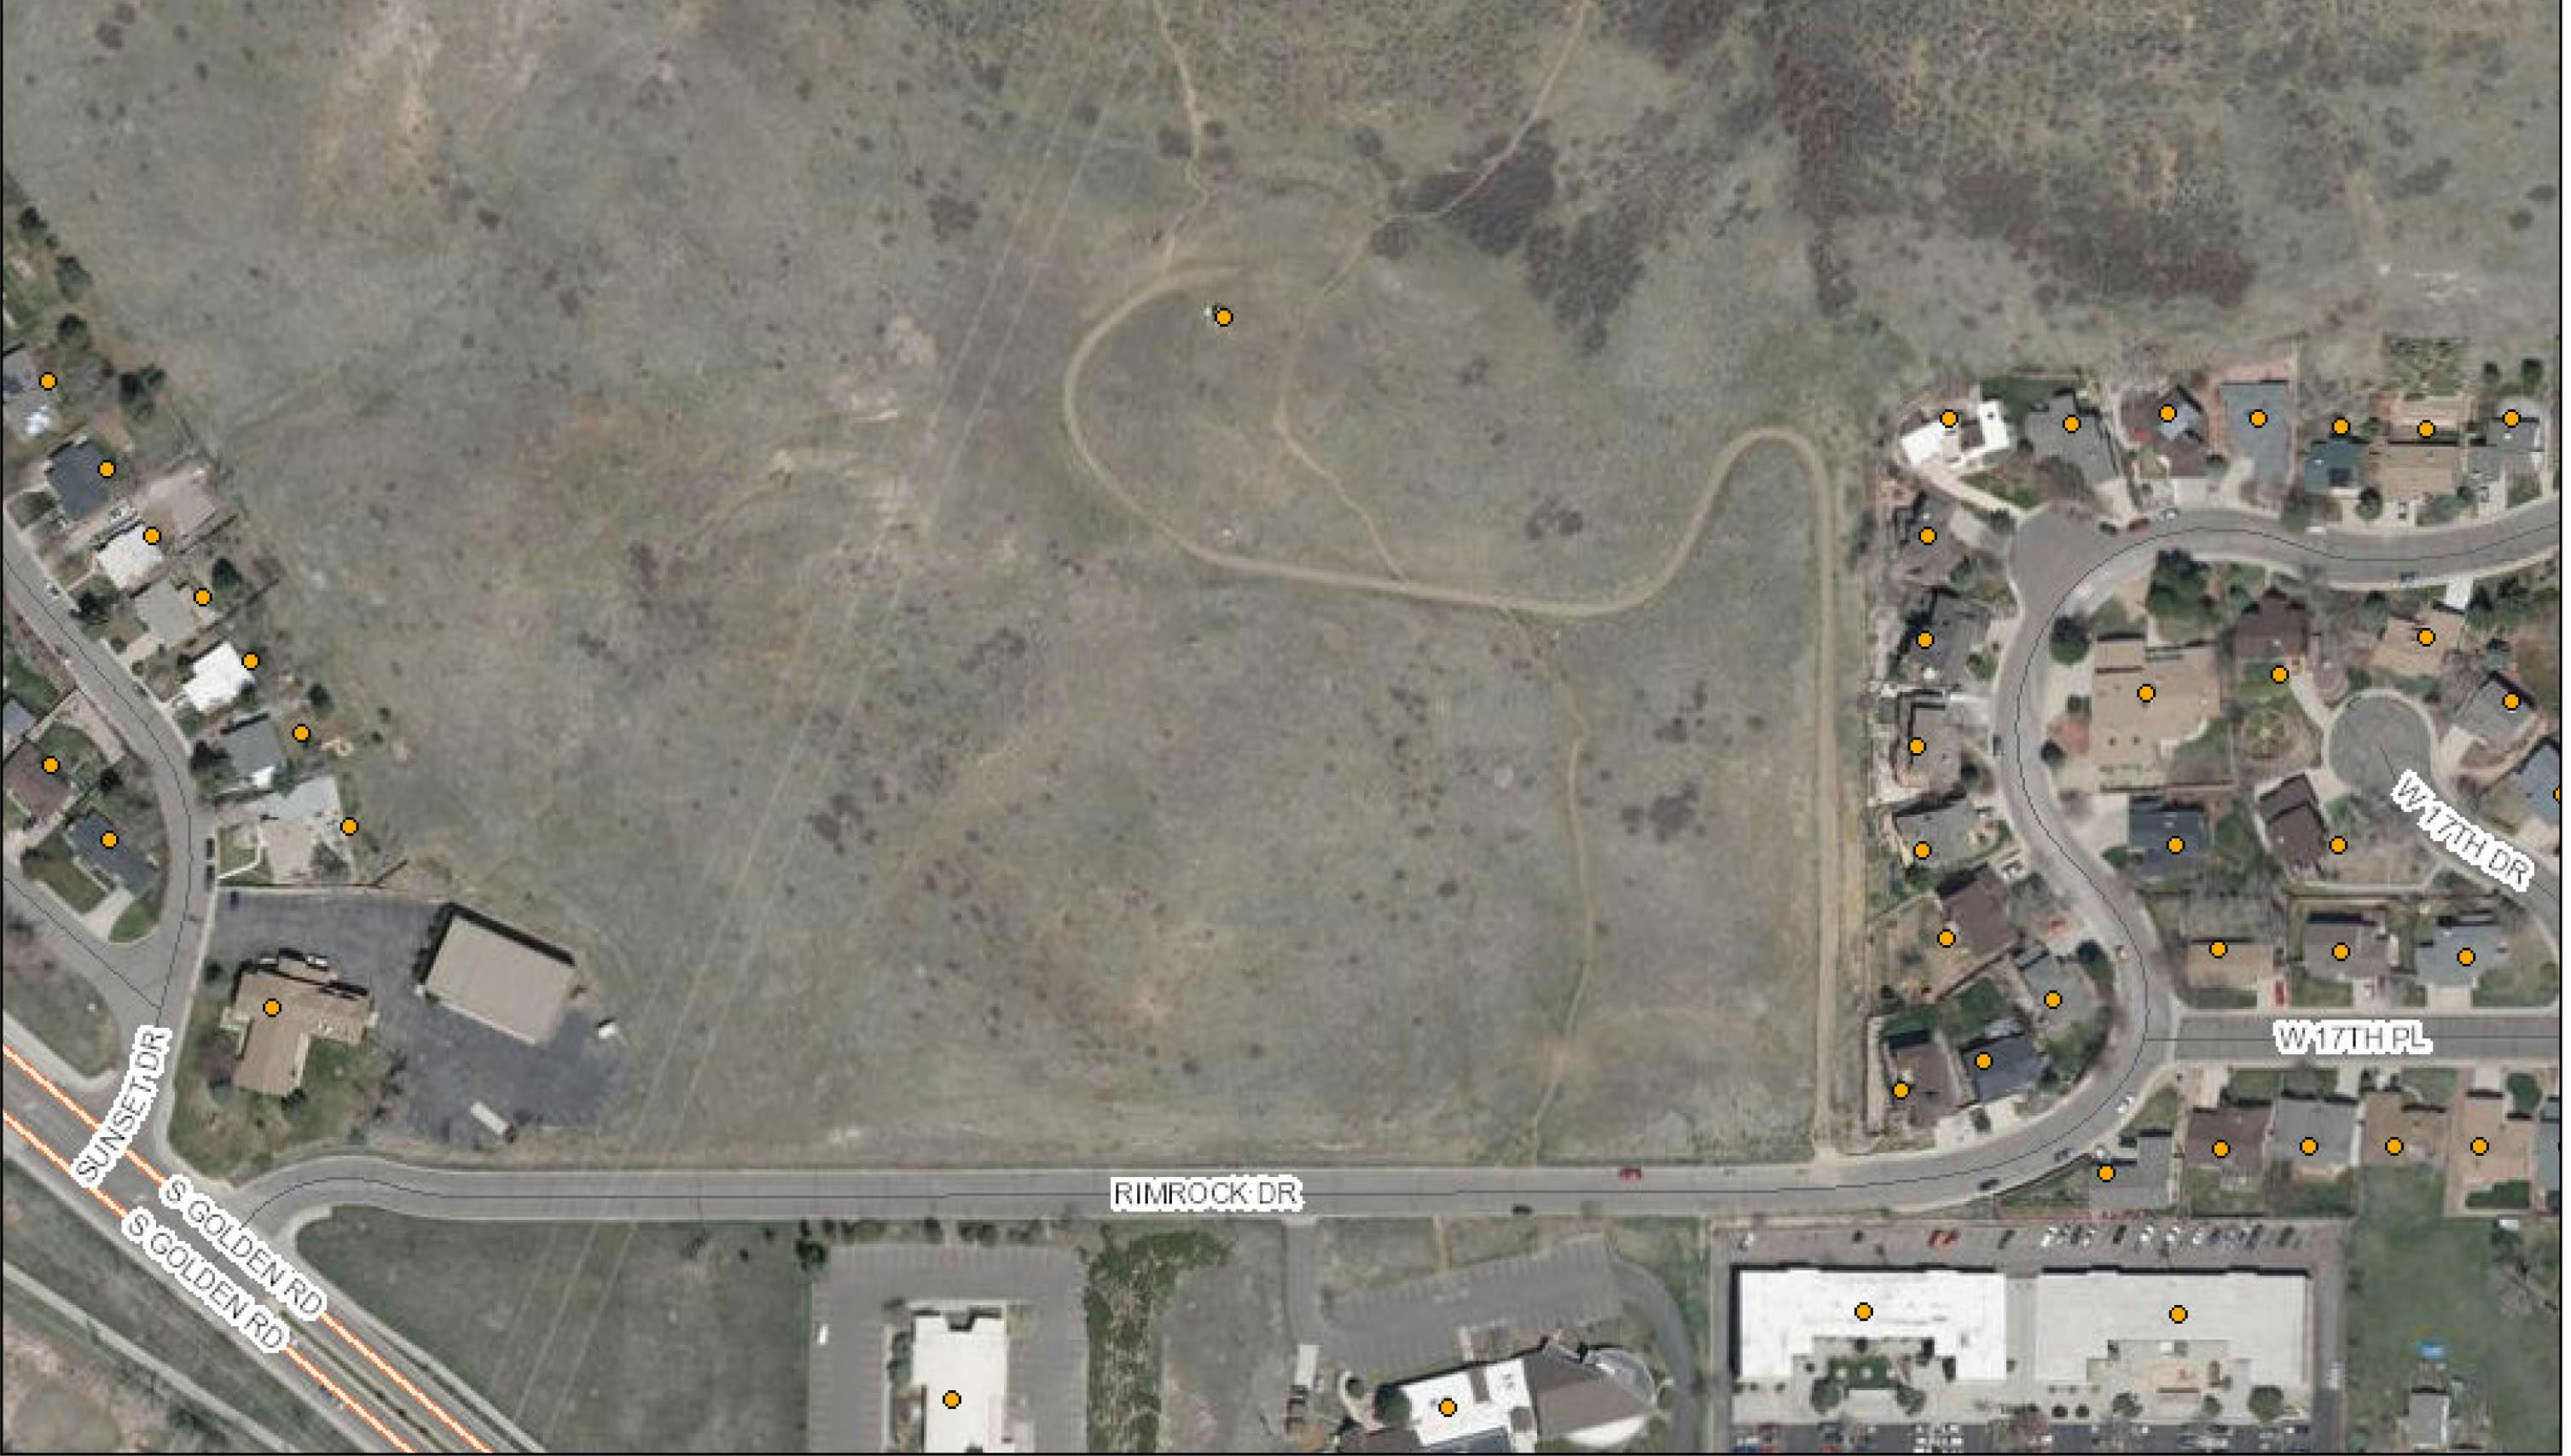 Arc GIS Rimrock Drive aerial view